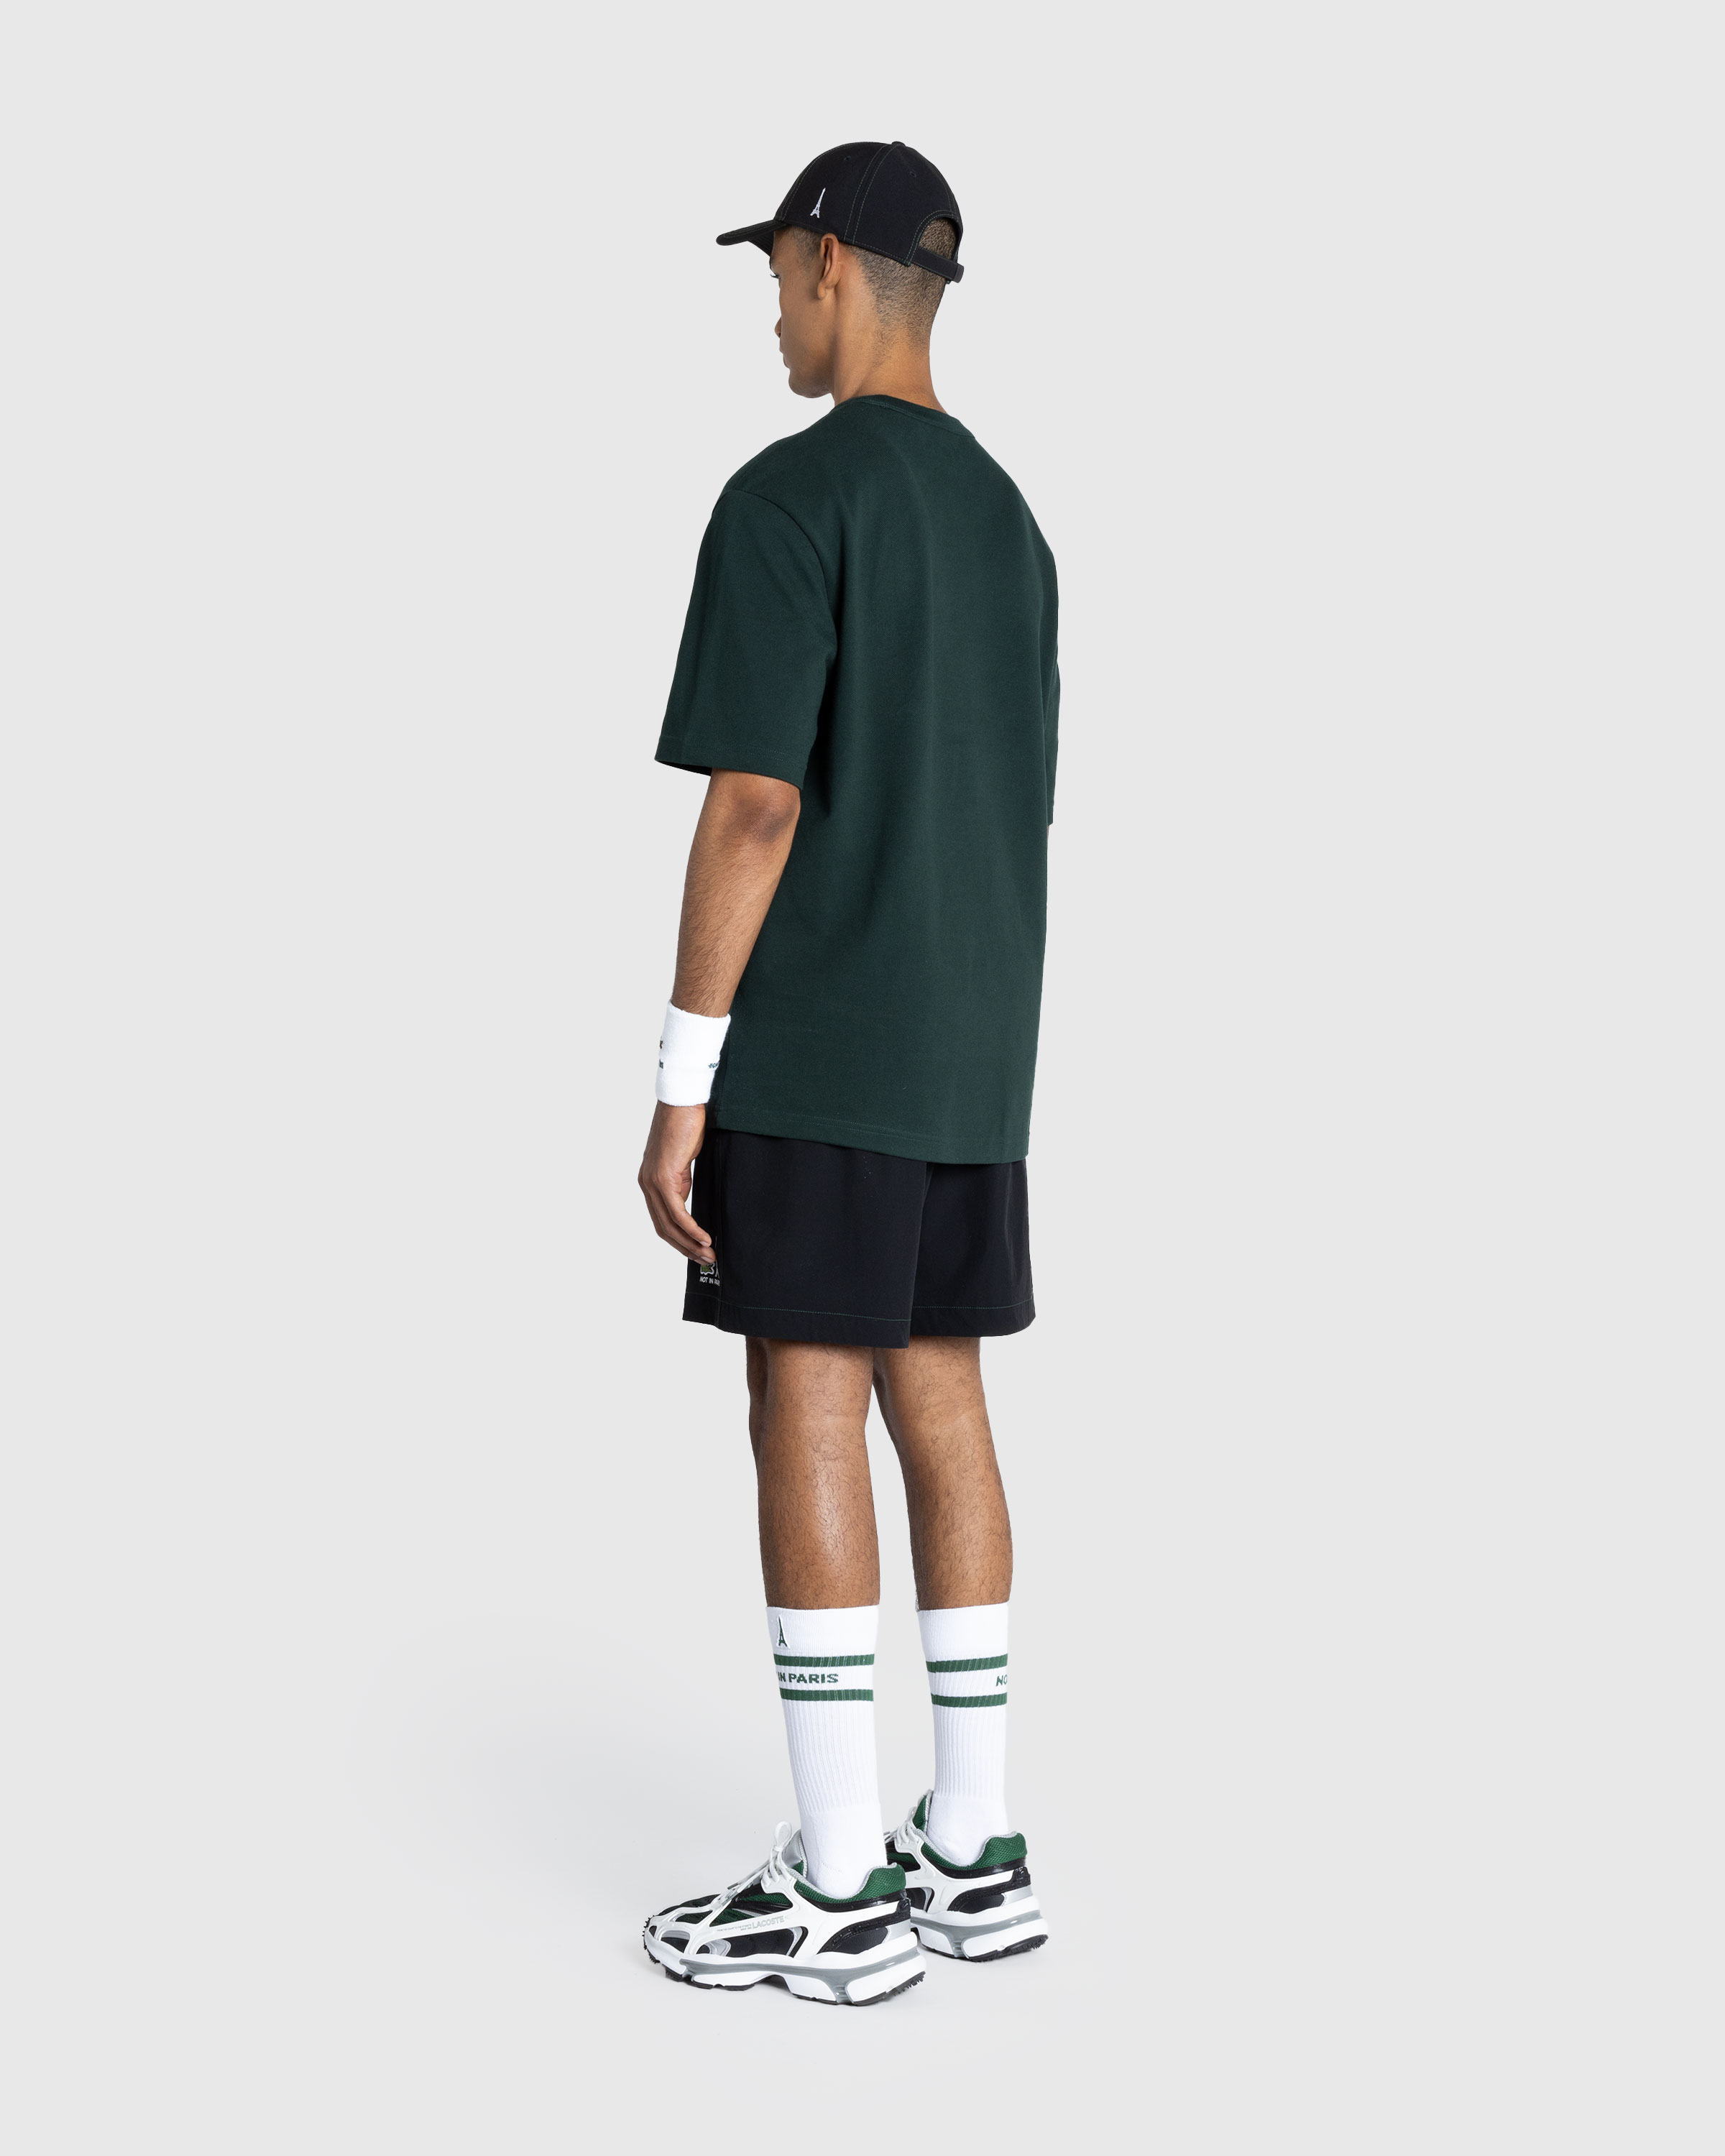 Lacoste x Highsnobiety – Piqué T-Shirt Green - T-Shirts - Green - Image 5